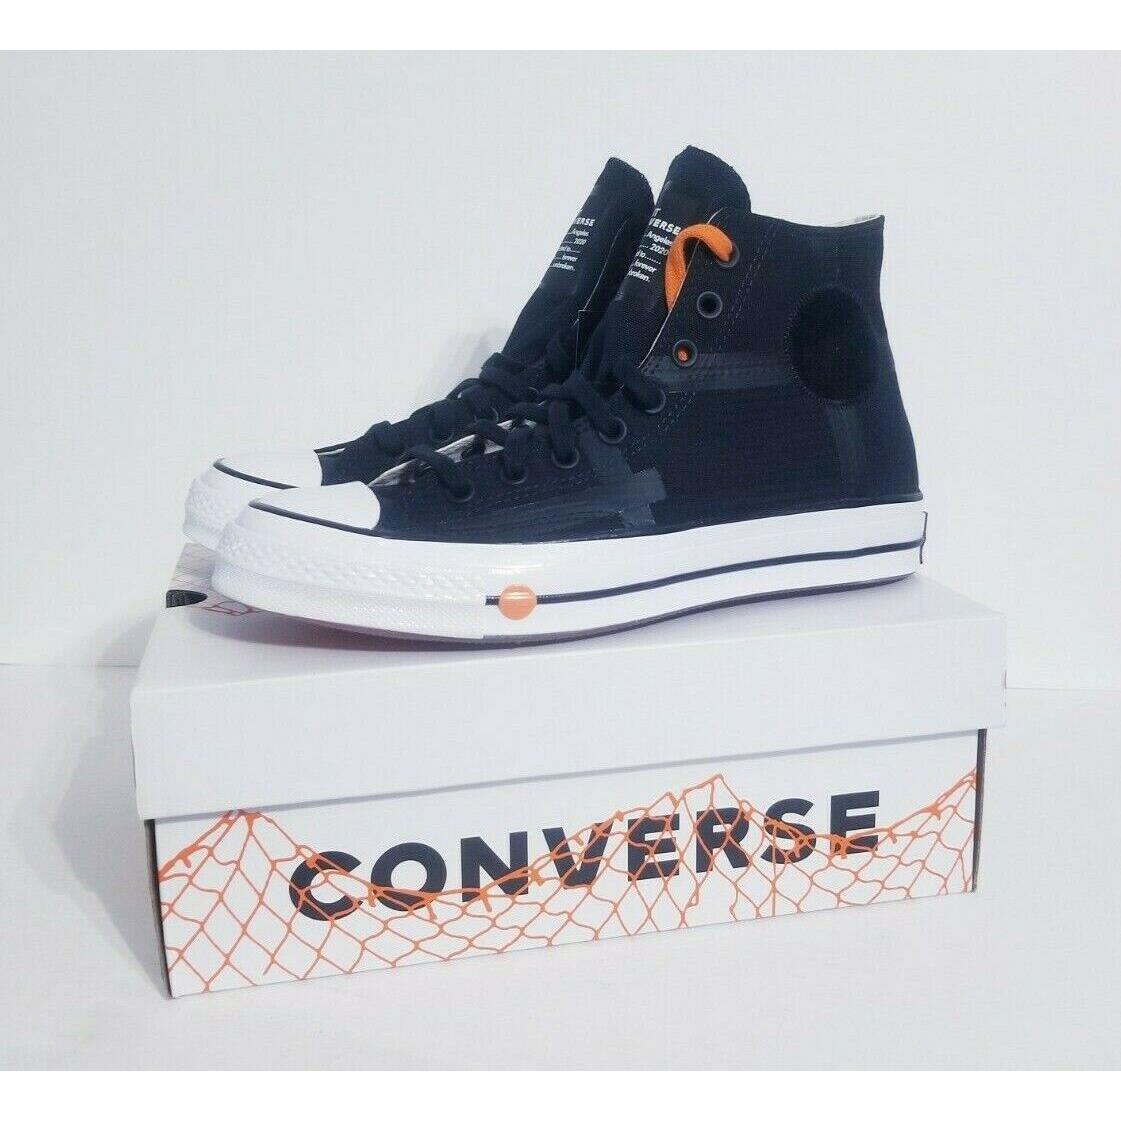 Converse Chuck 70 Rokit Chuck 70 High `blacktop` Boots Shoes 168211C Size 8